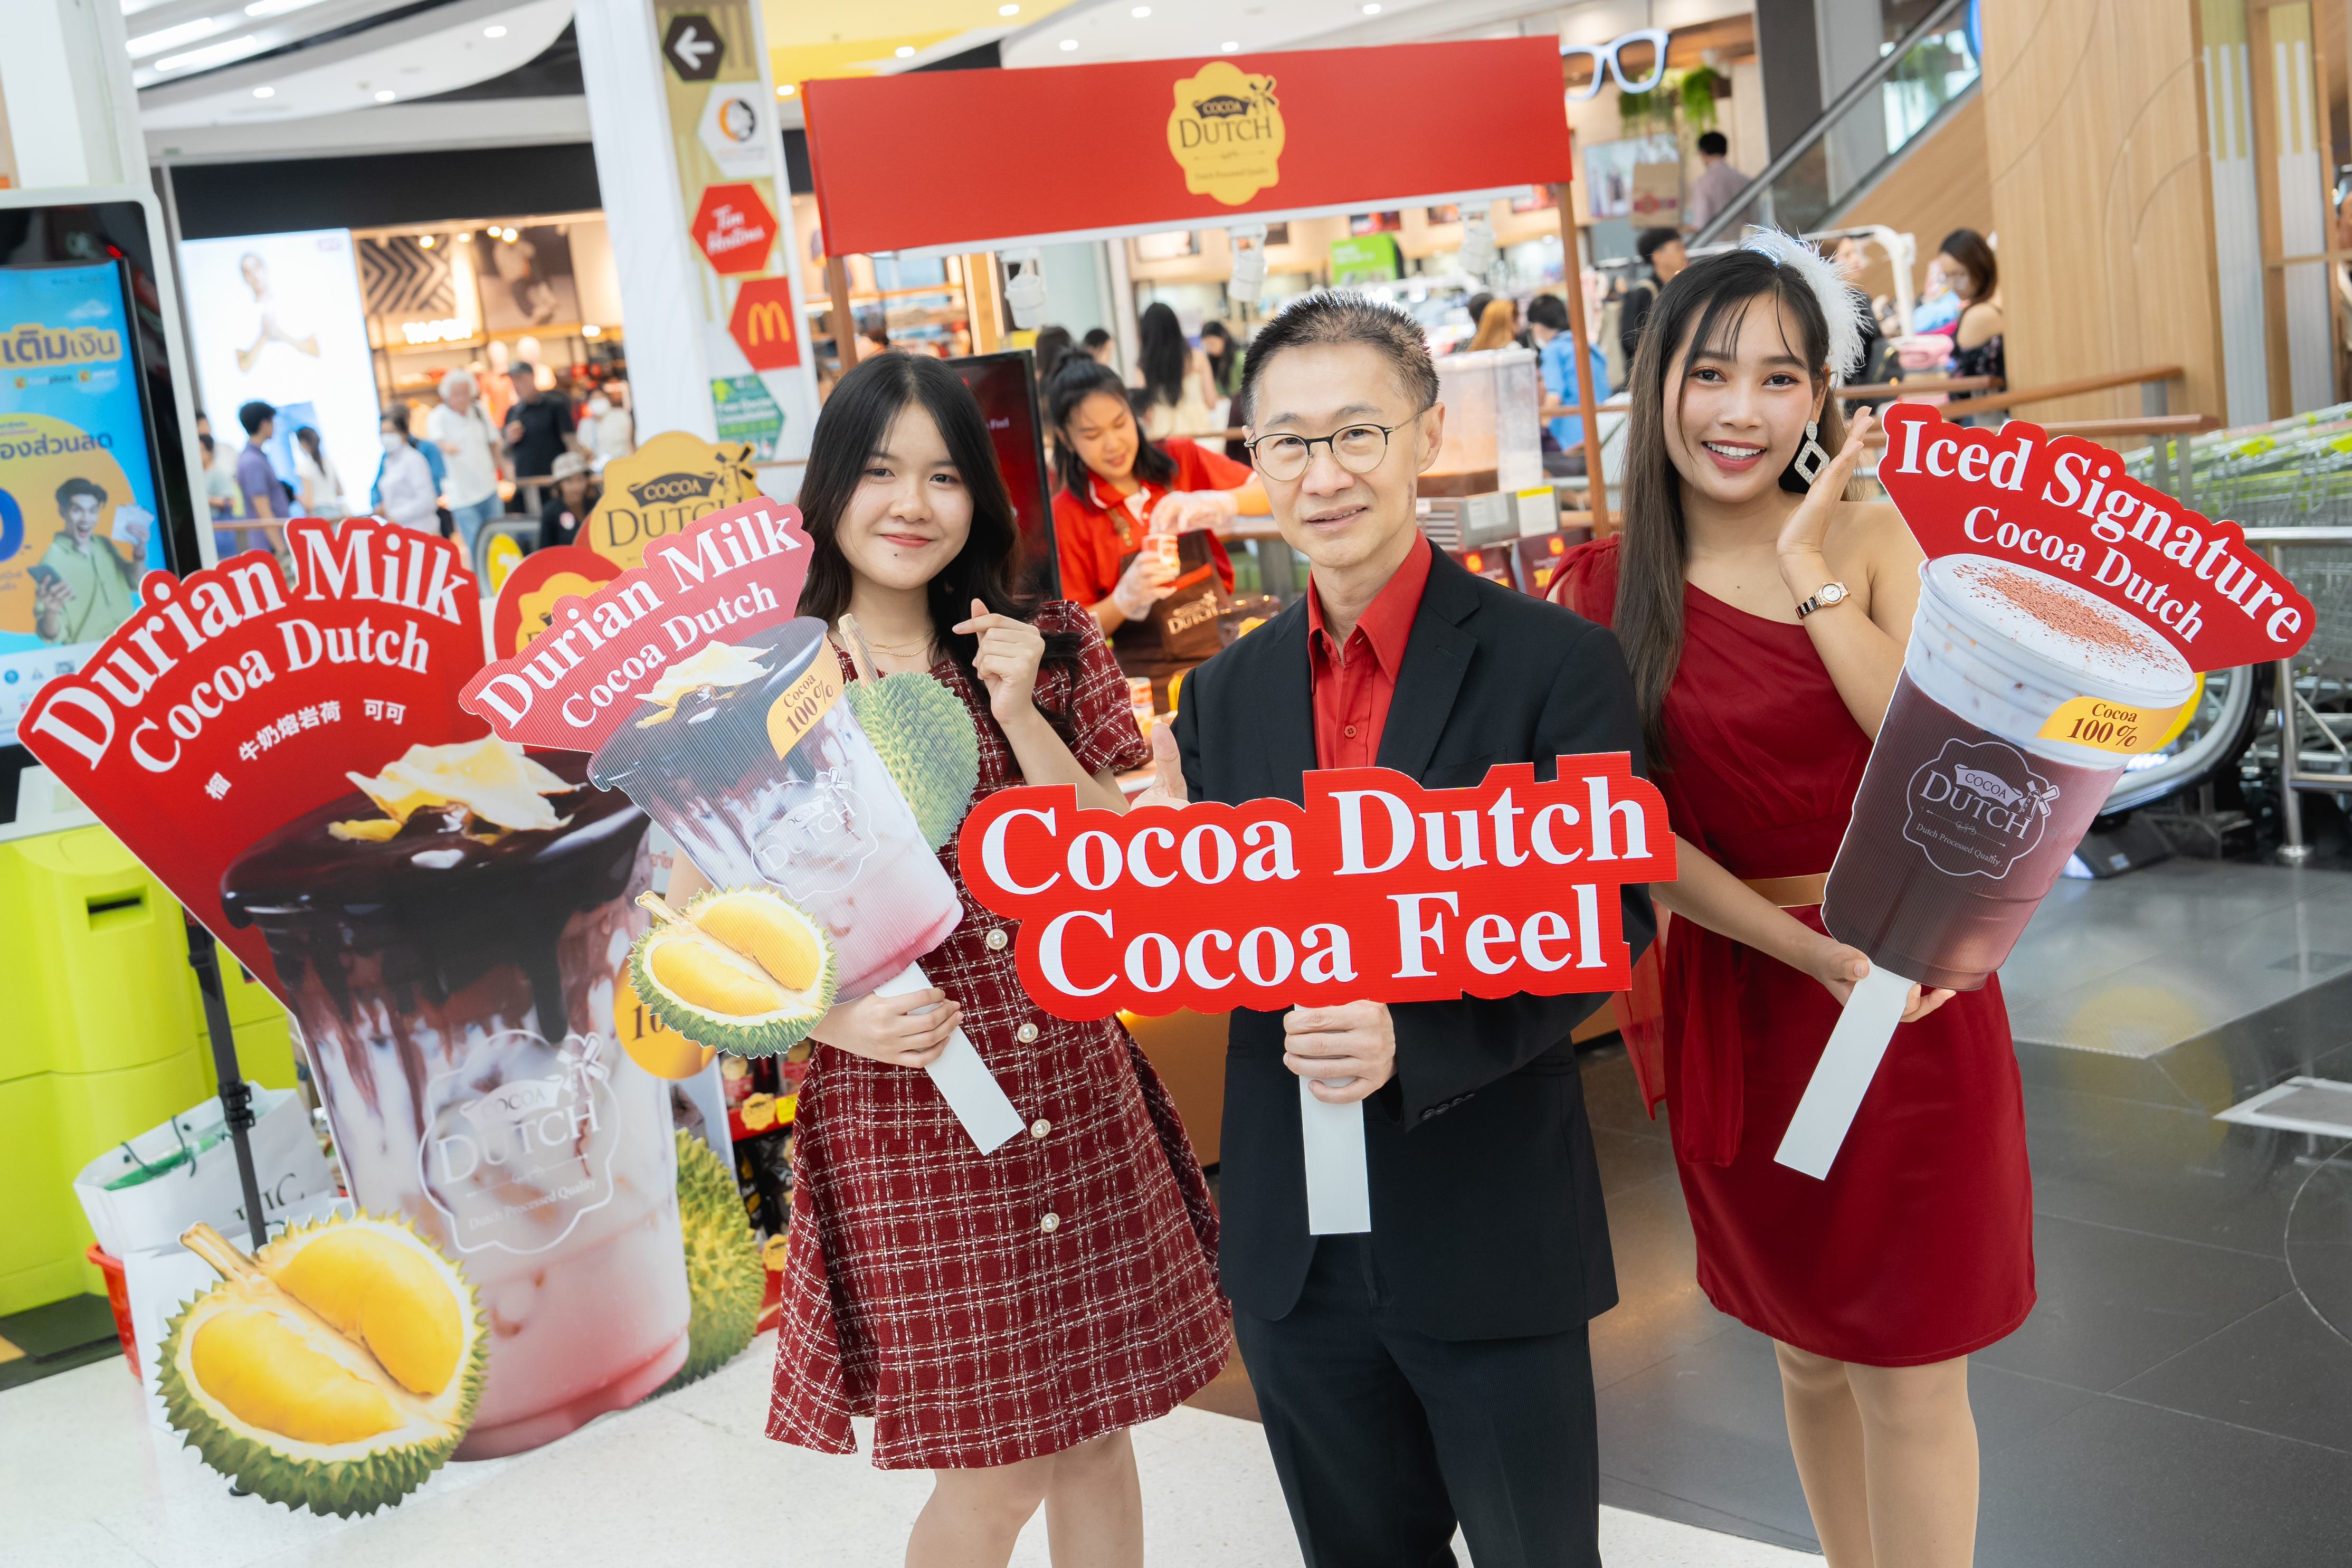 BJC ปั้นแบรนด์ 'Cocoa Dutch' เปิด Kiosk Cafe สาขาแรก ใจกลางกรุงเทพมหานคร พร้อมวางแผนขยายสาขาในอนาคต